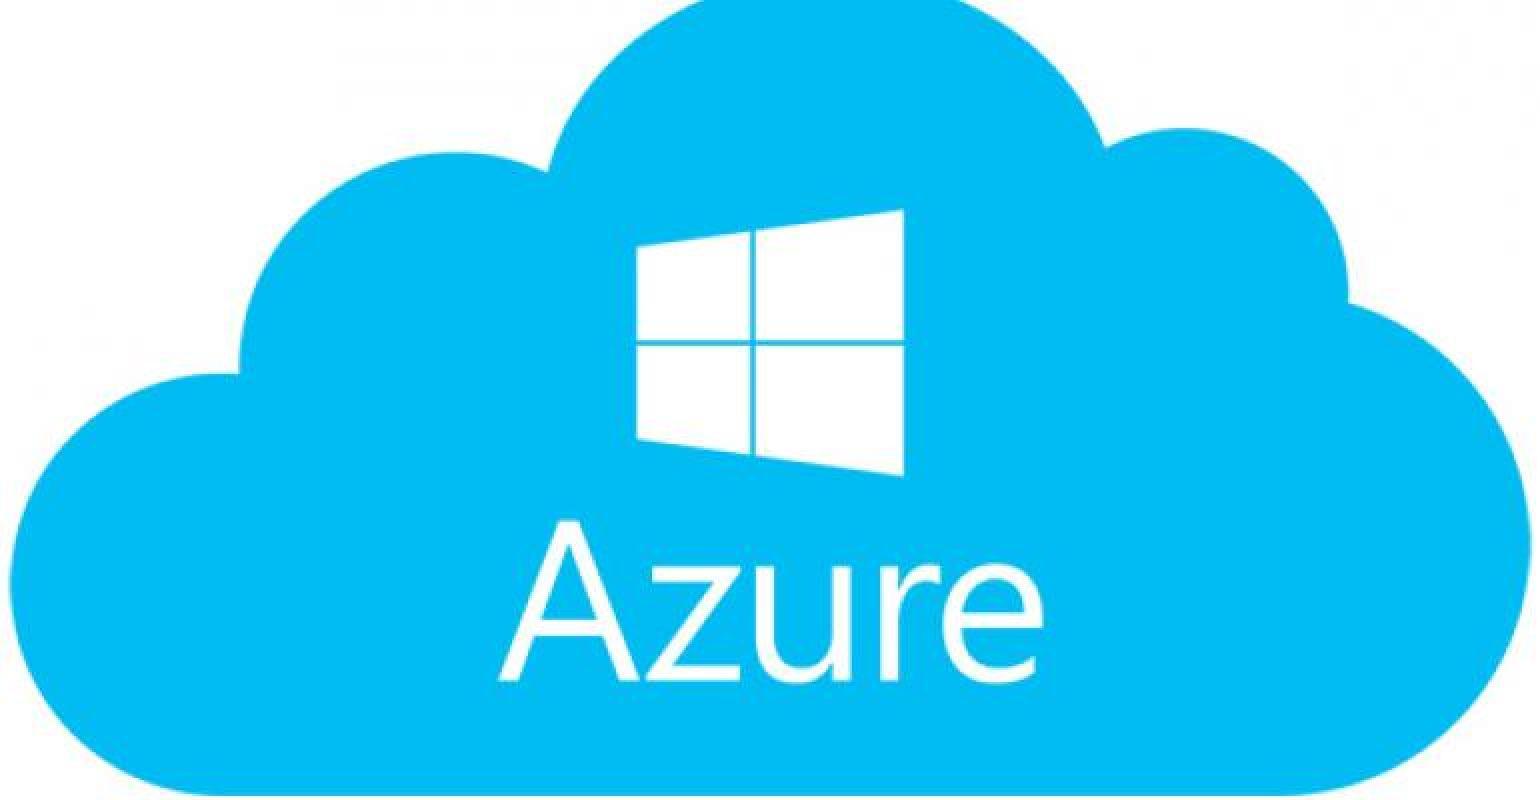 4 Weeks Microsoft Azure training for Beginners in Petaluma | Microsoft Azure Fundamentals | Azure cloud computing training | Microsoft Azure Fundamentals AZ-900 Certification Exam Prep (Preparation) Training Course